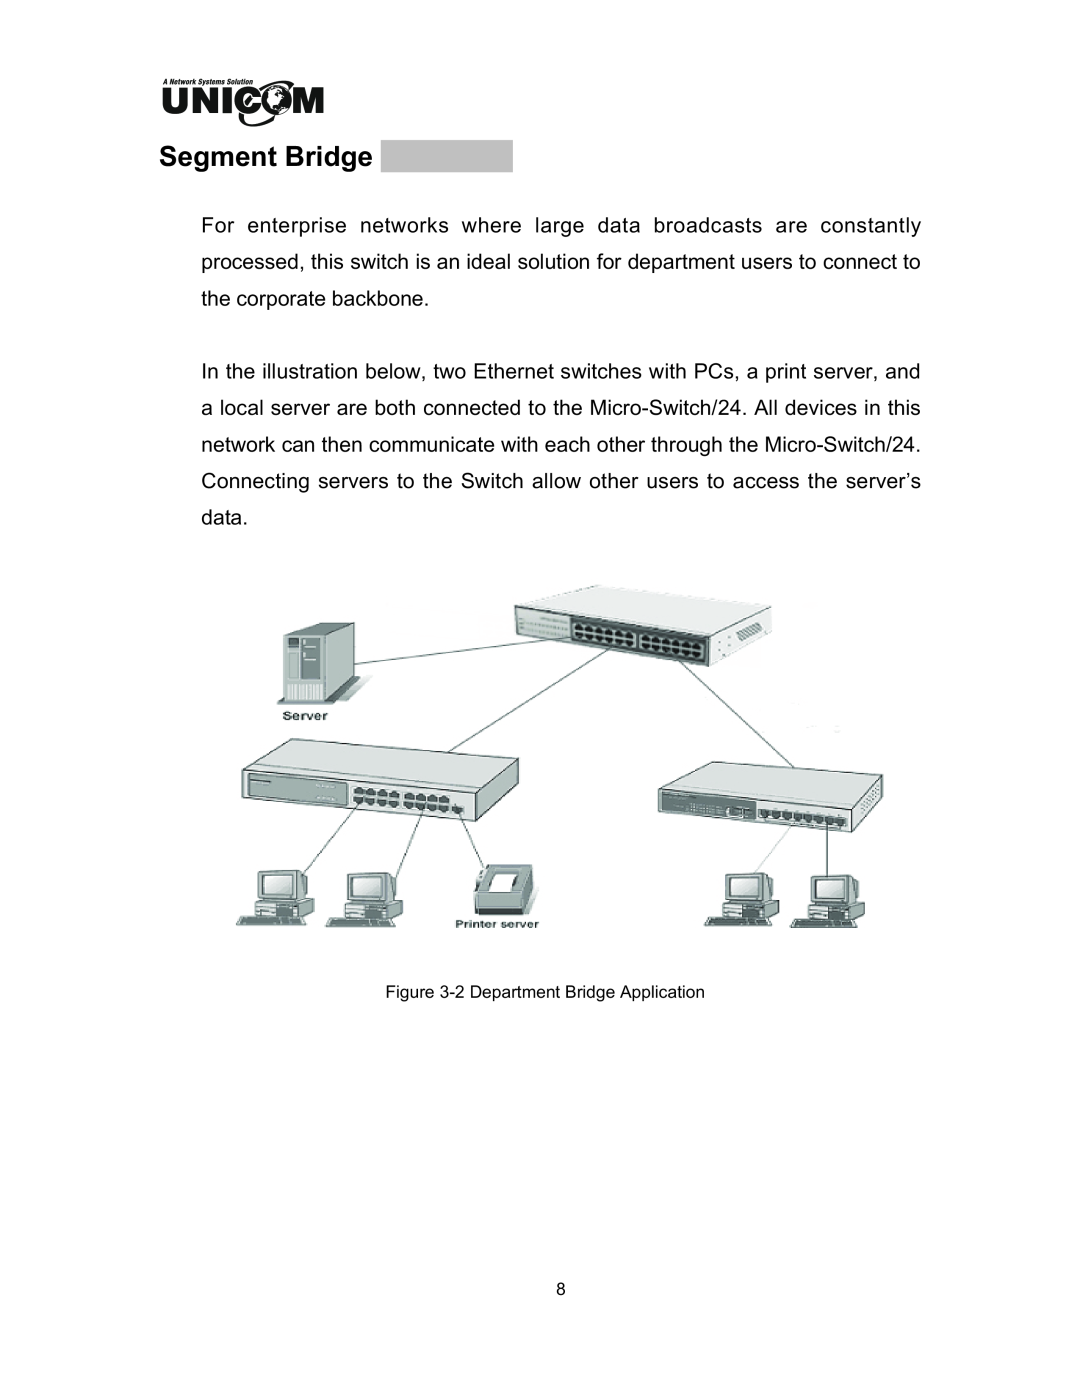 UNICOM Electric FEP-32024T specifications Segment Bridge, 2 Department Bridge Application 